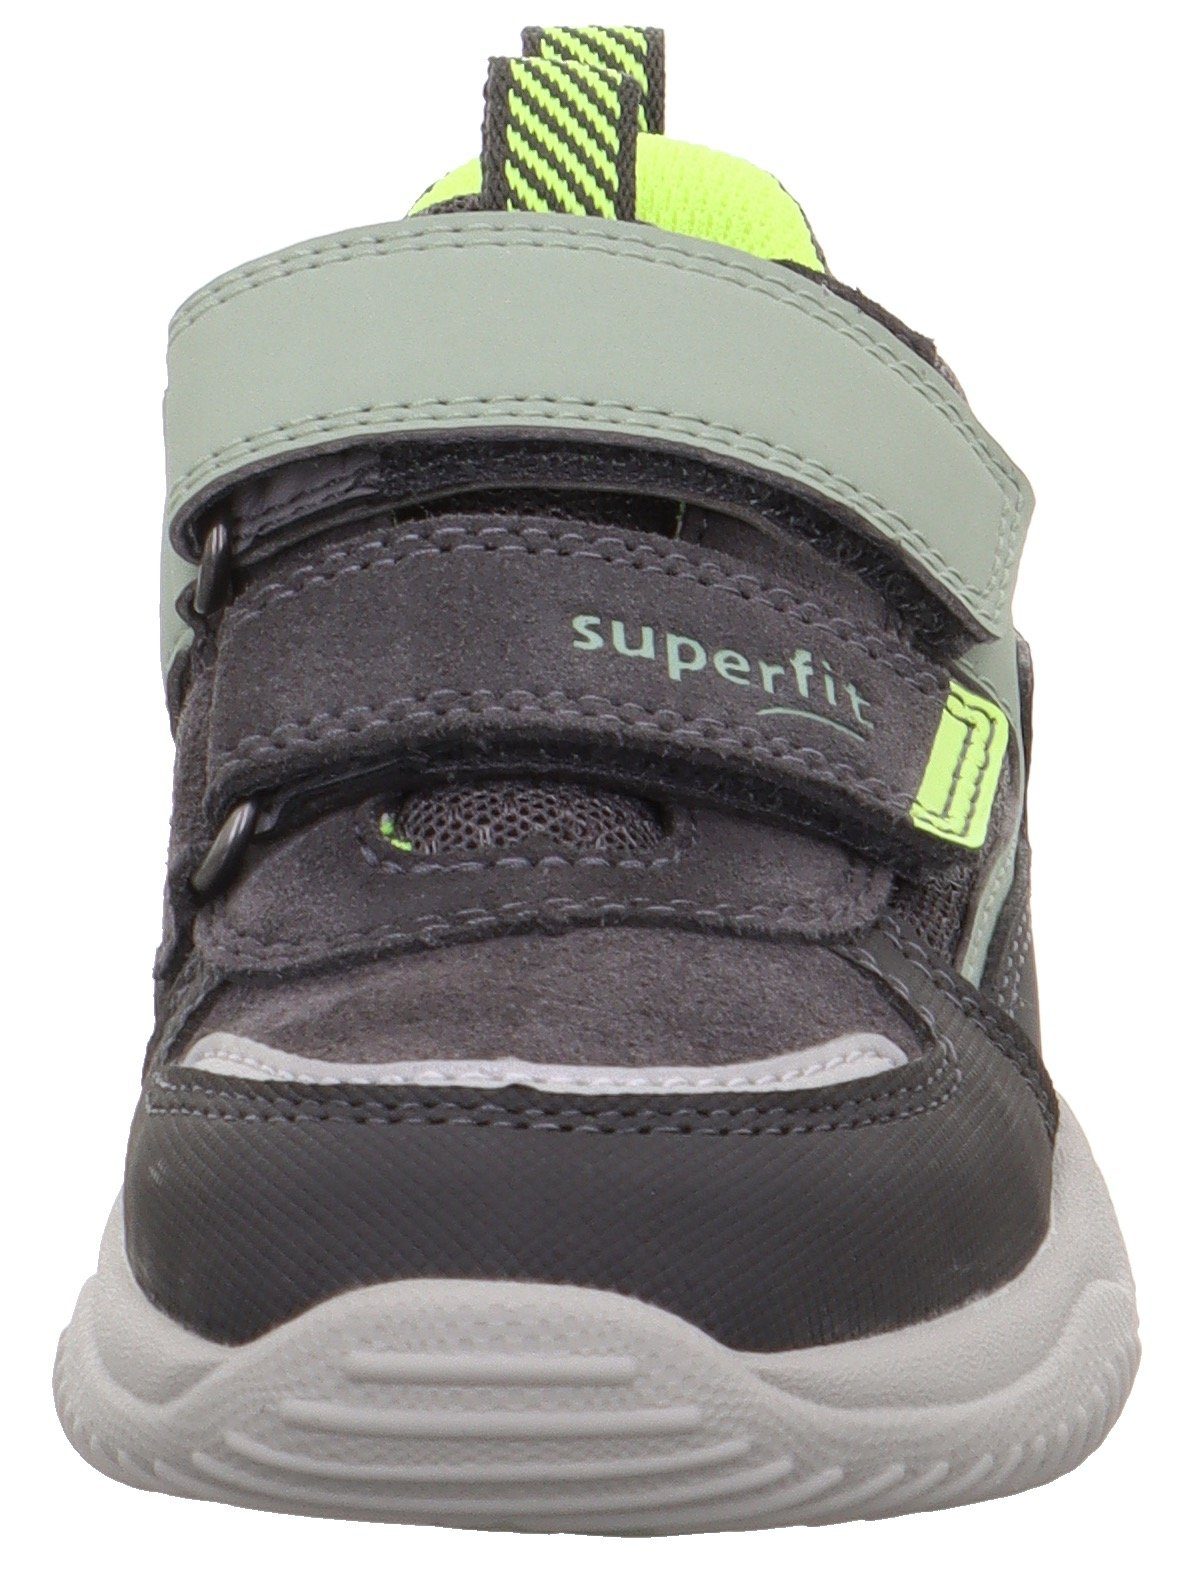 Materialmix STORM Superfit Mittel im Sneaker WMS: (Packung)